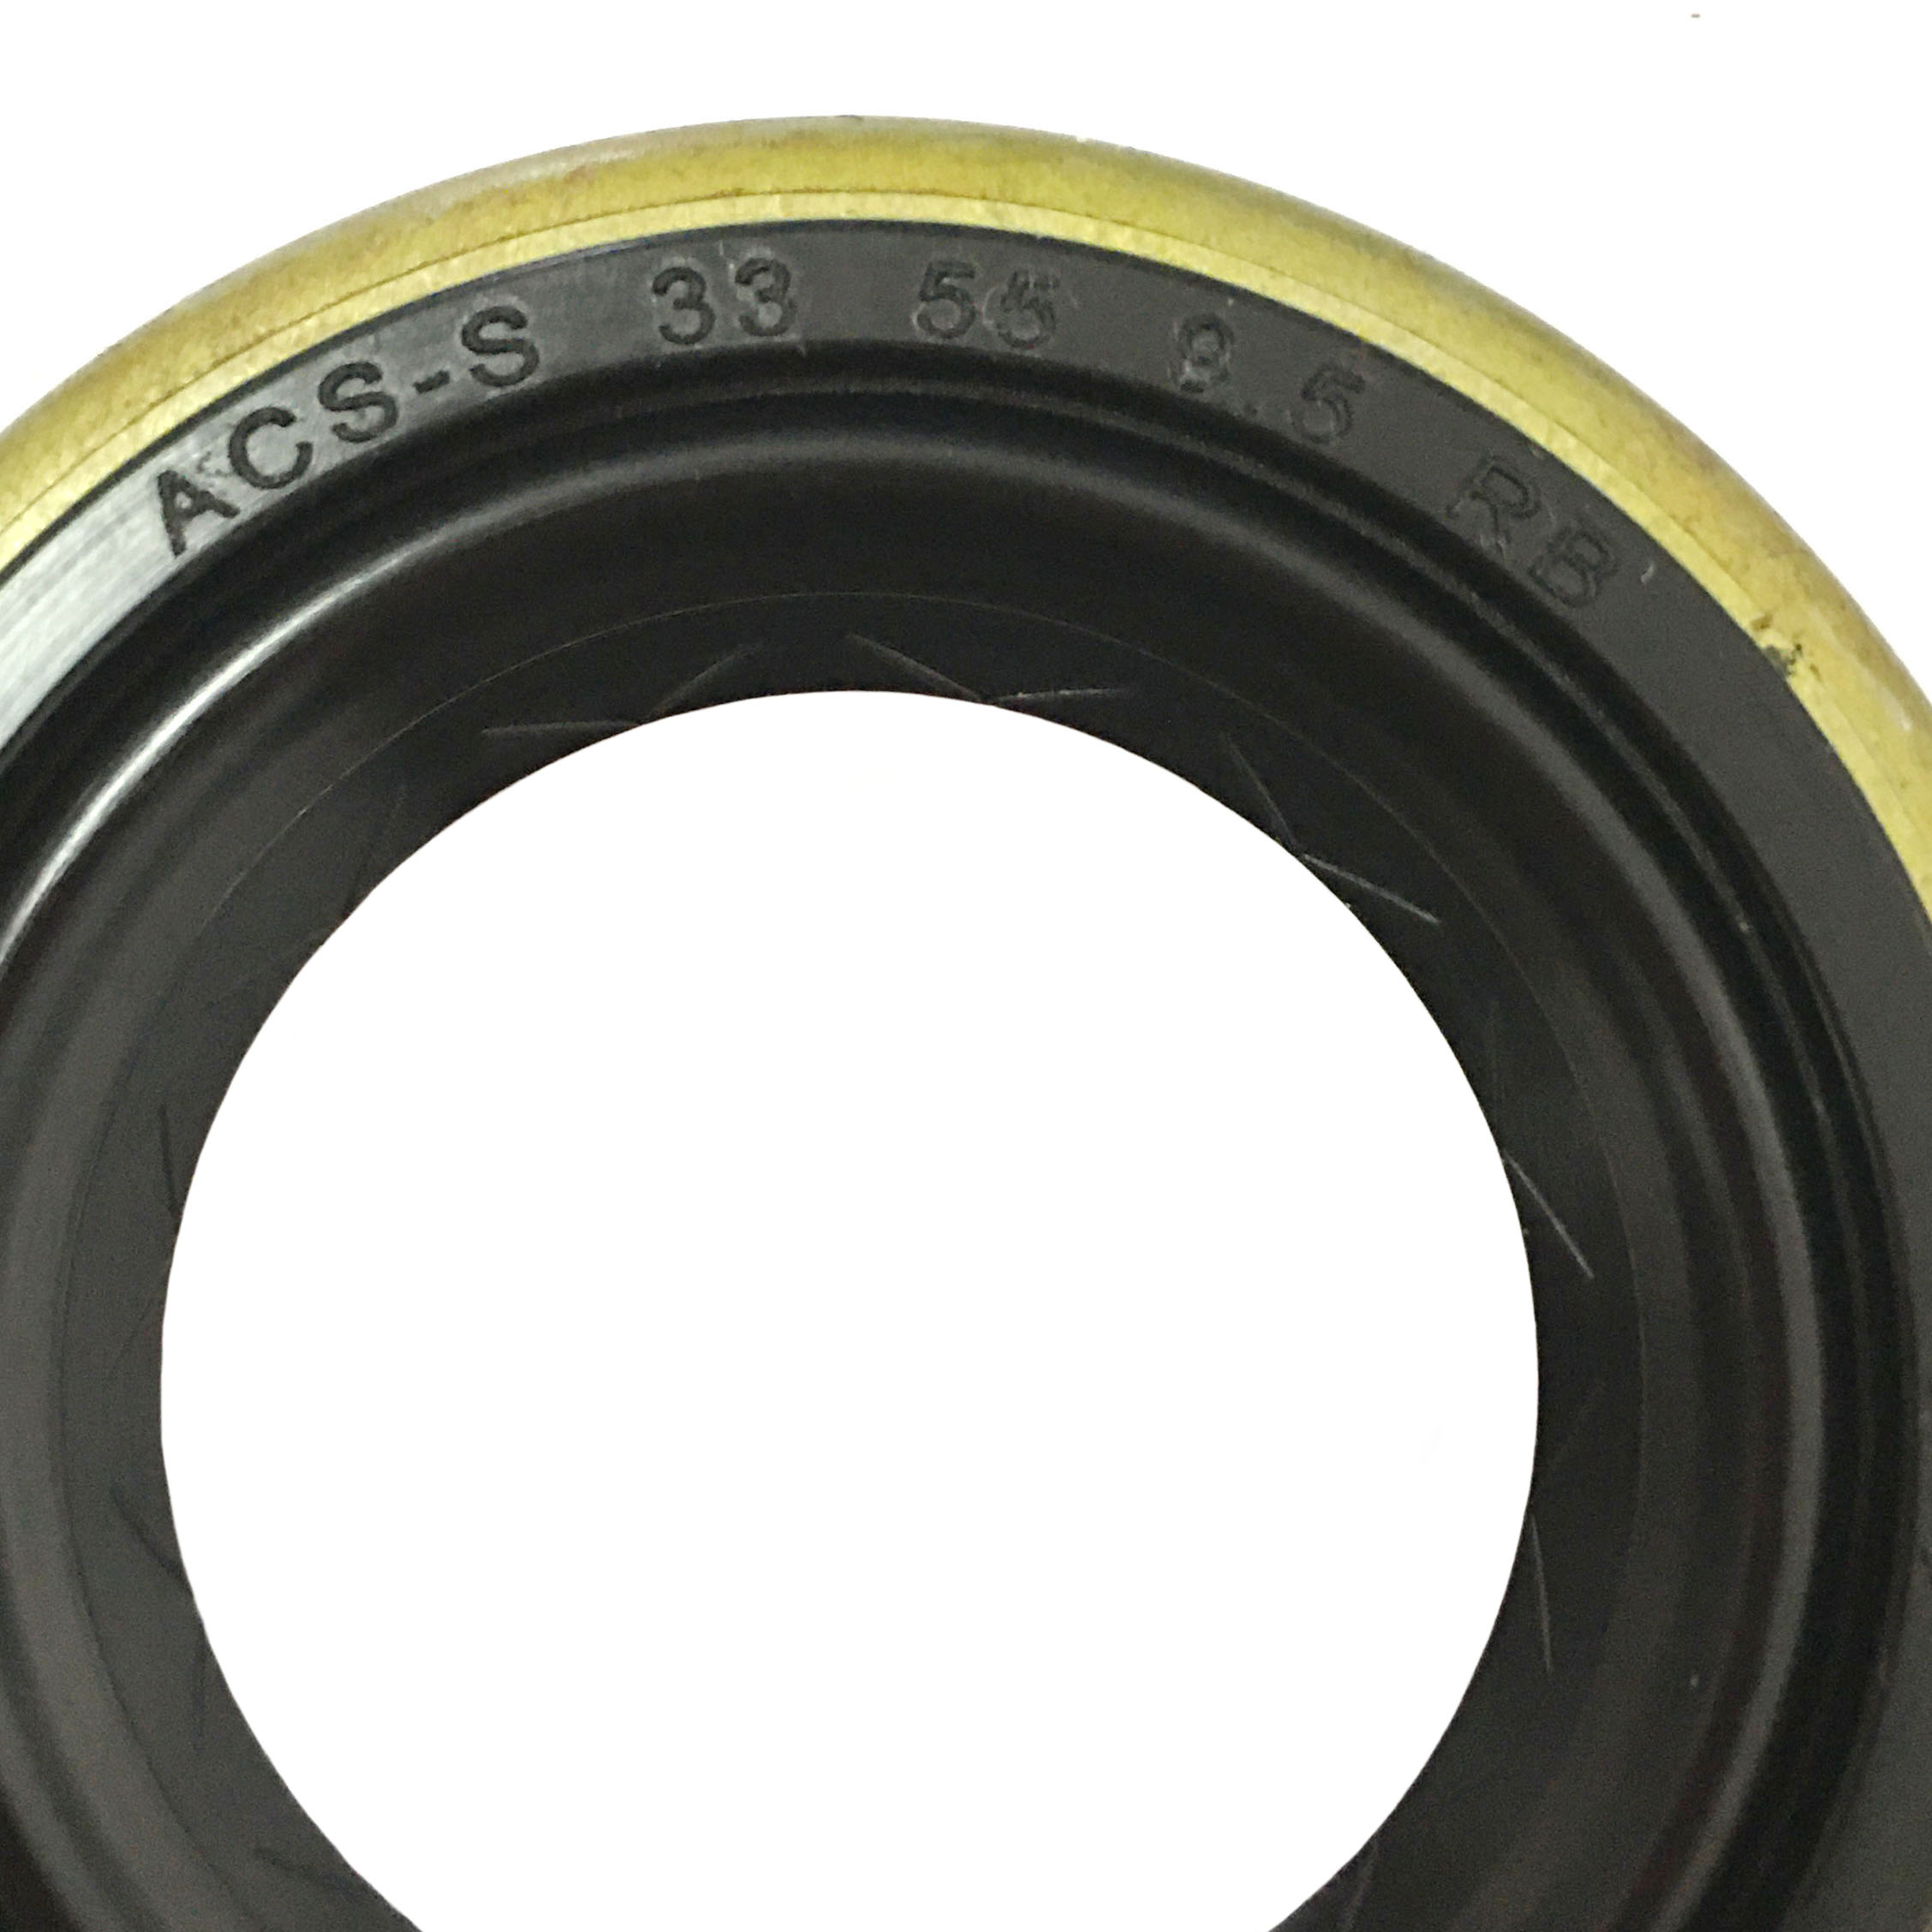 OEM 8943189100 Size 33*55*9.5 ACS-S RB Wheel Hub Oil Seal For ISUZU